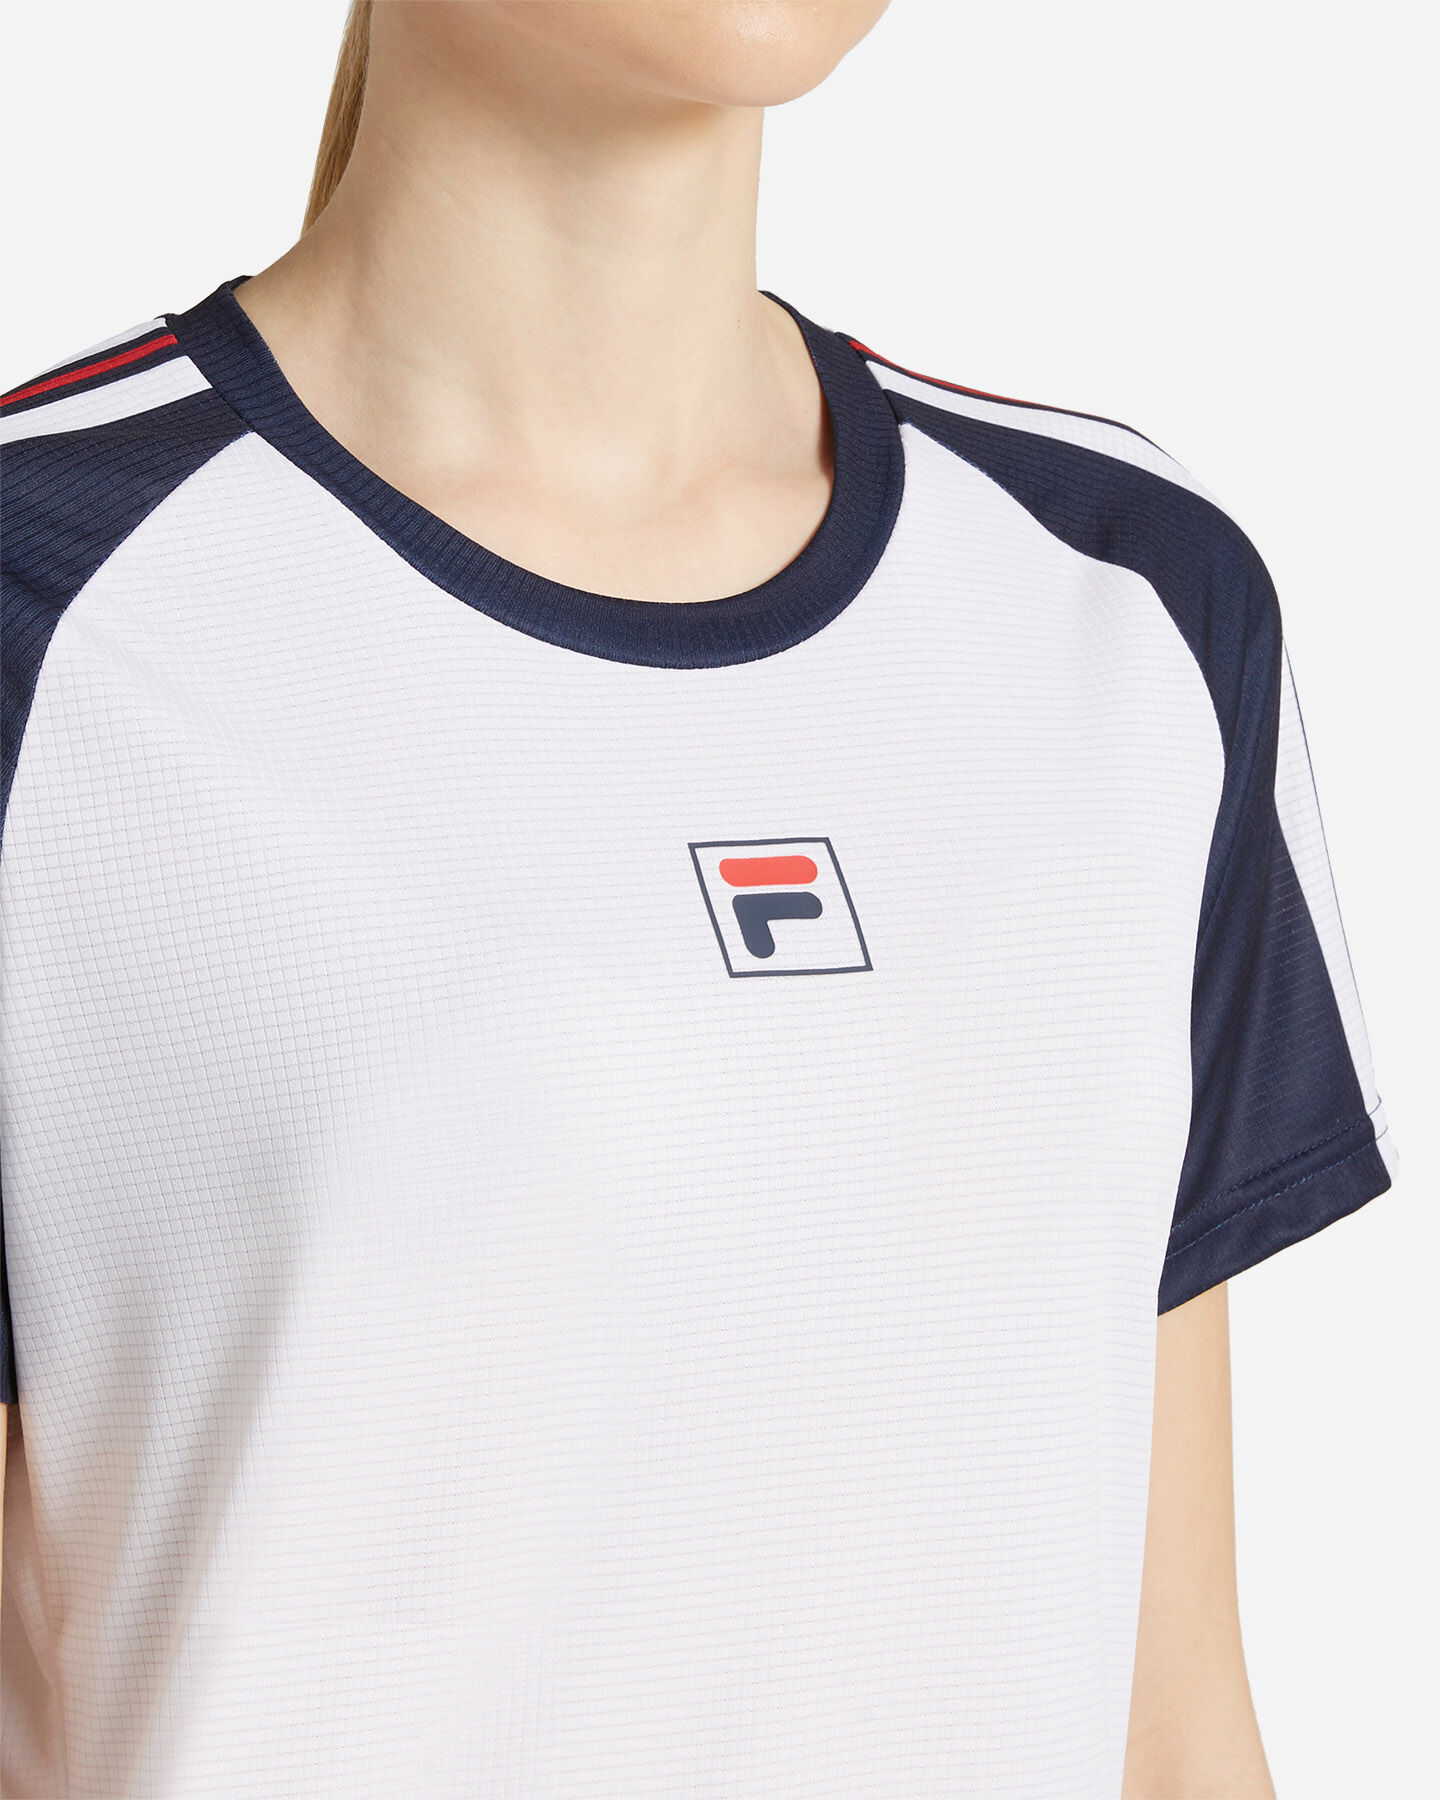  T-Shirt tennis FILA MATCH LINE W S4117679|001/519|XS scatto 4